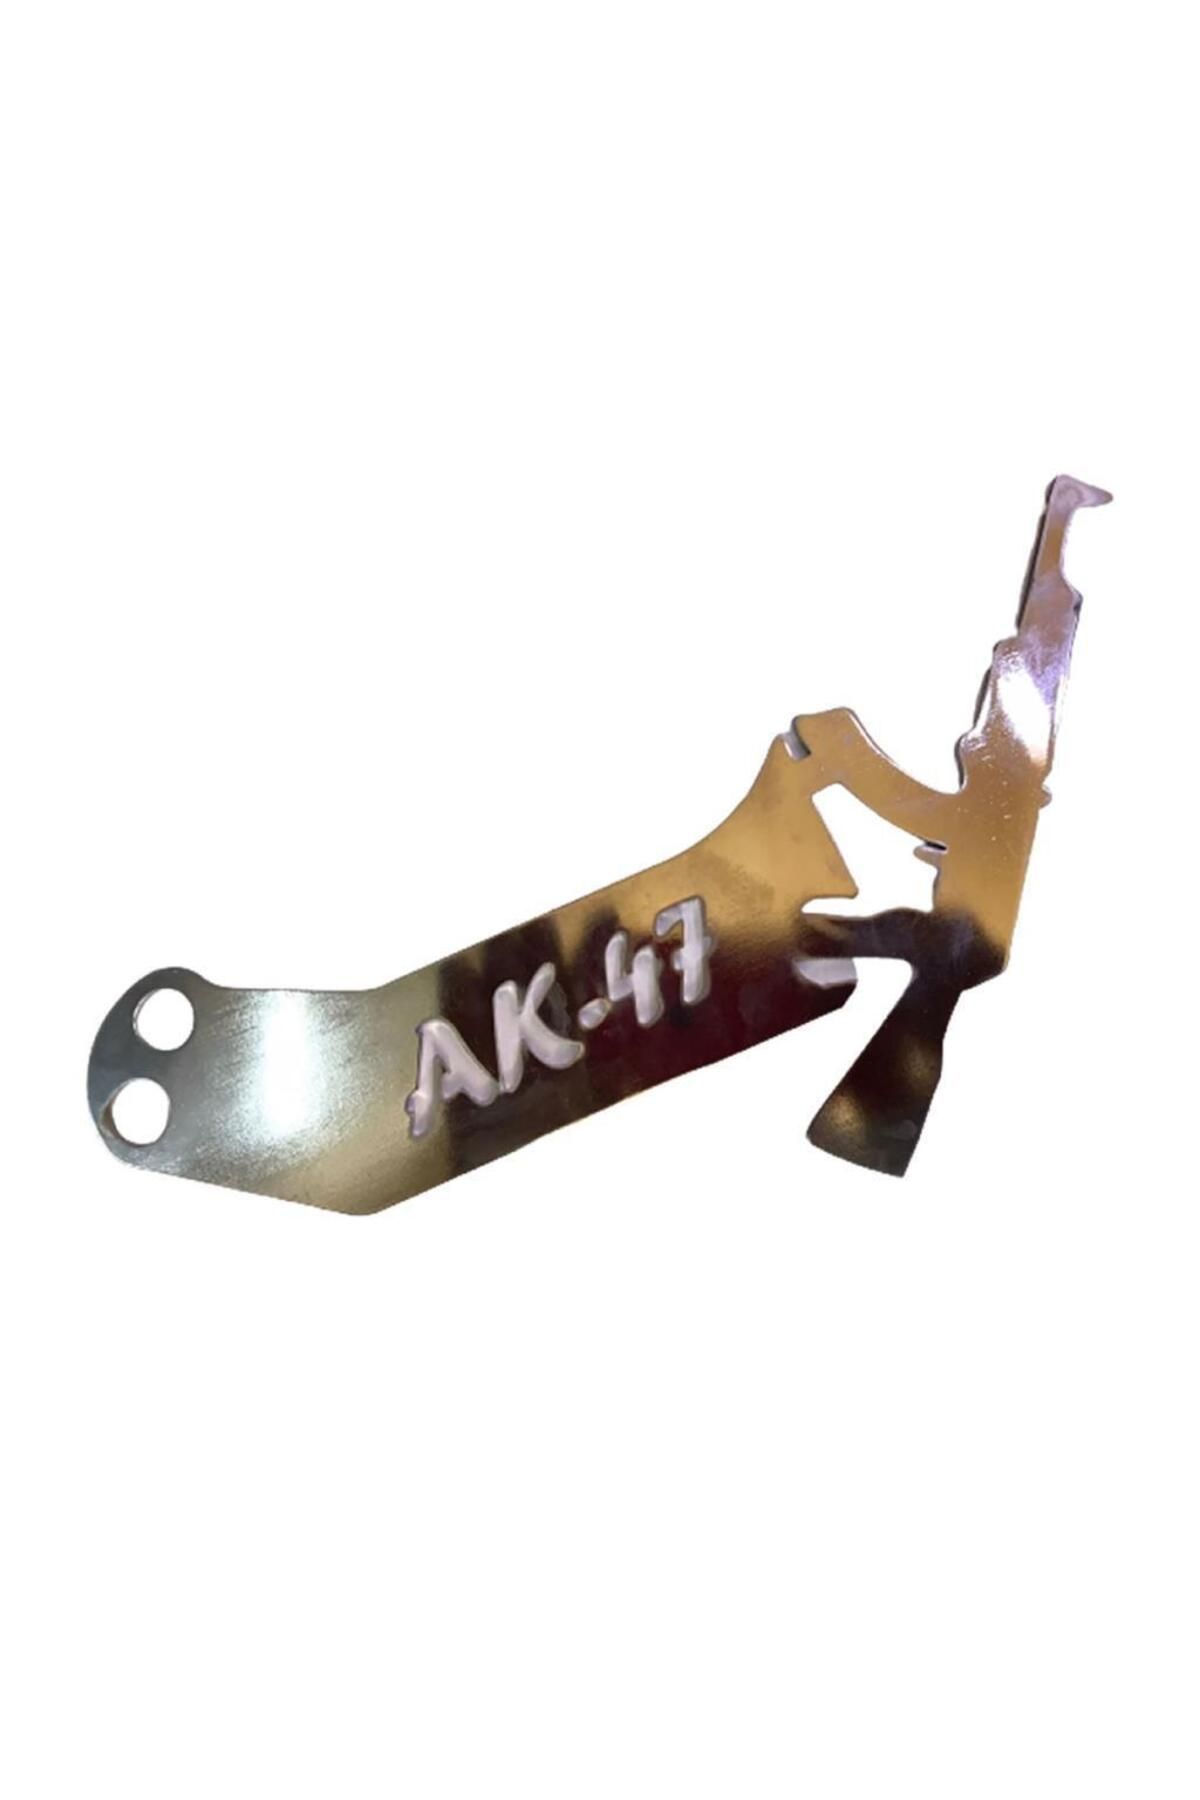 Monero Motosiklet Modifiye Çeki Demiri AK-47 Nikel